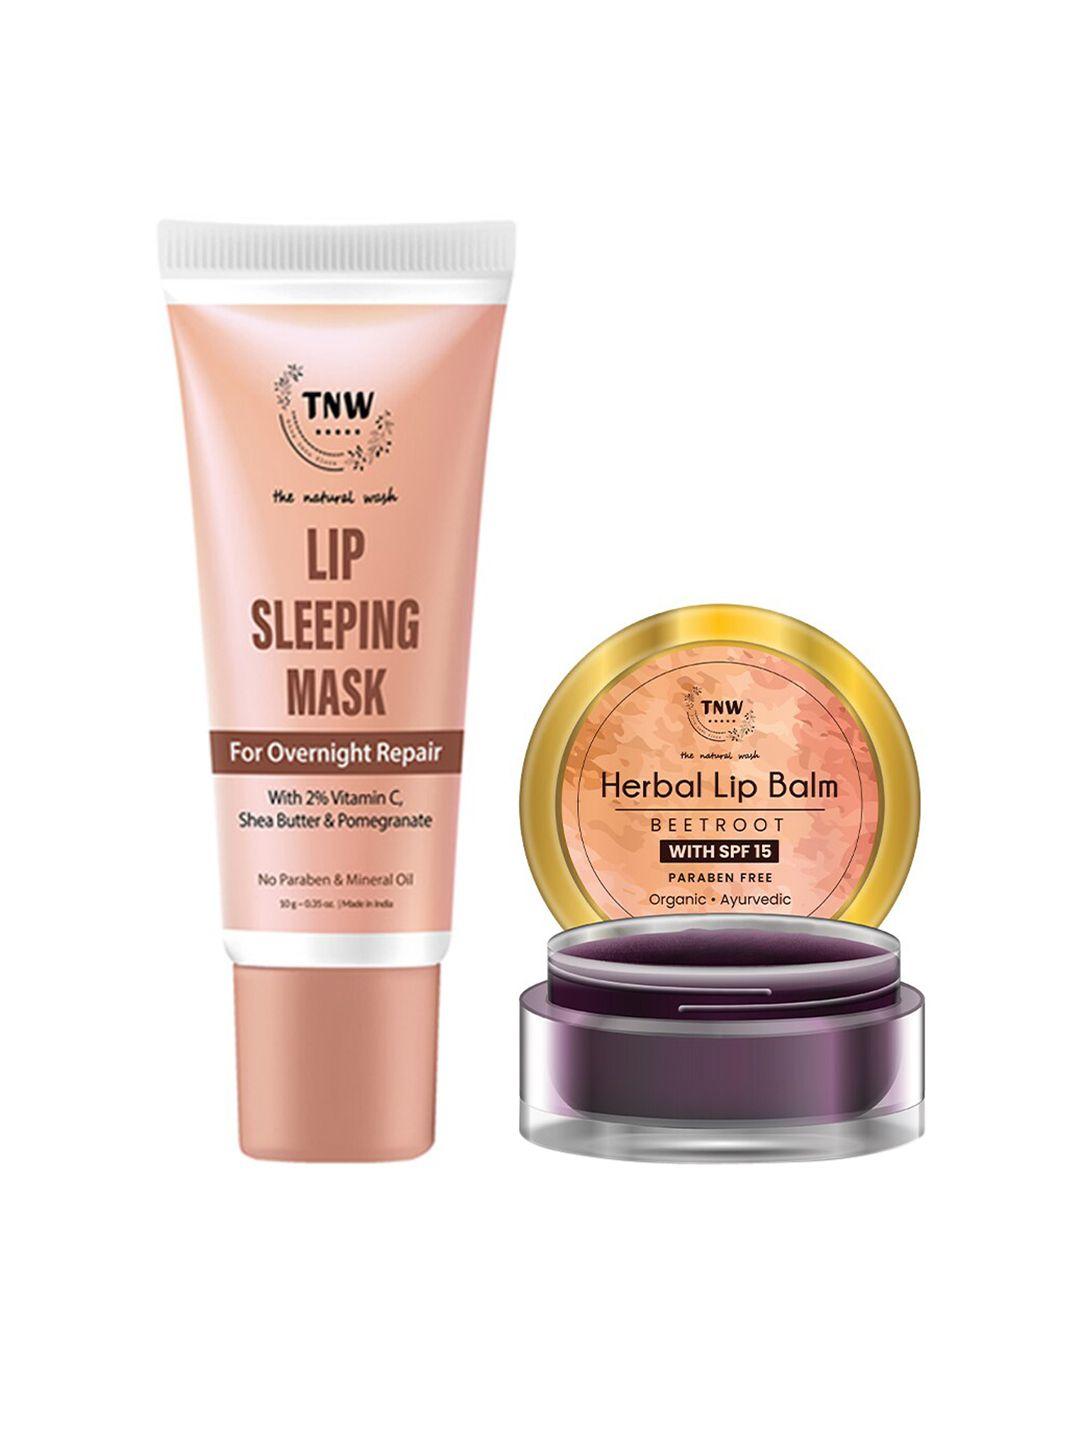 tnw the natural wash set of beetroot lip balm & lip sleeping mask